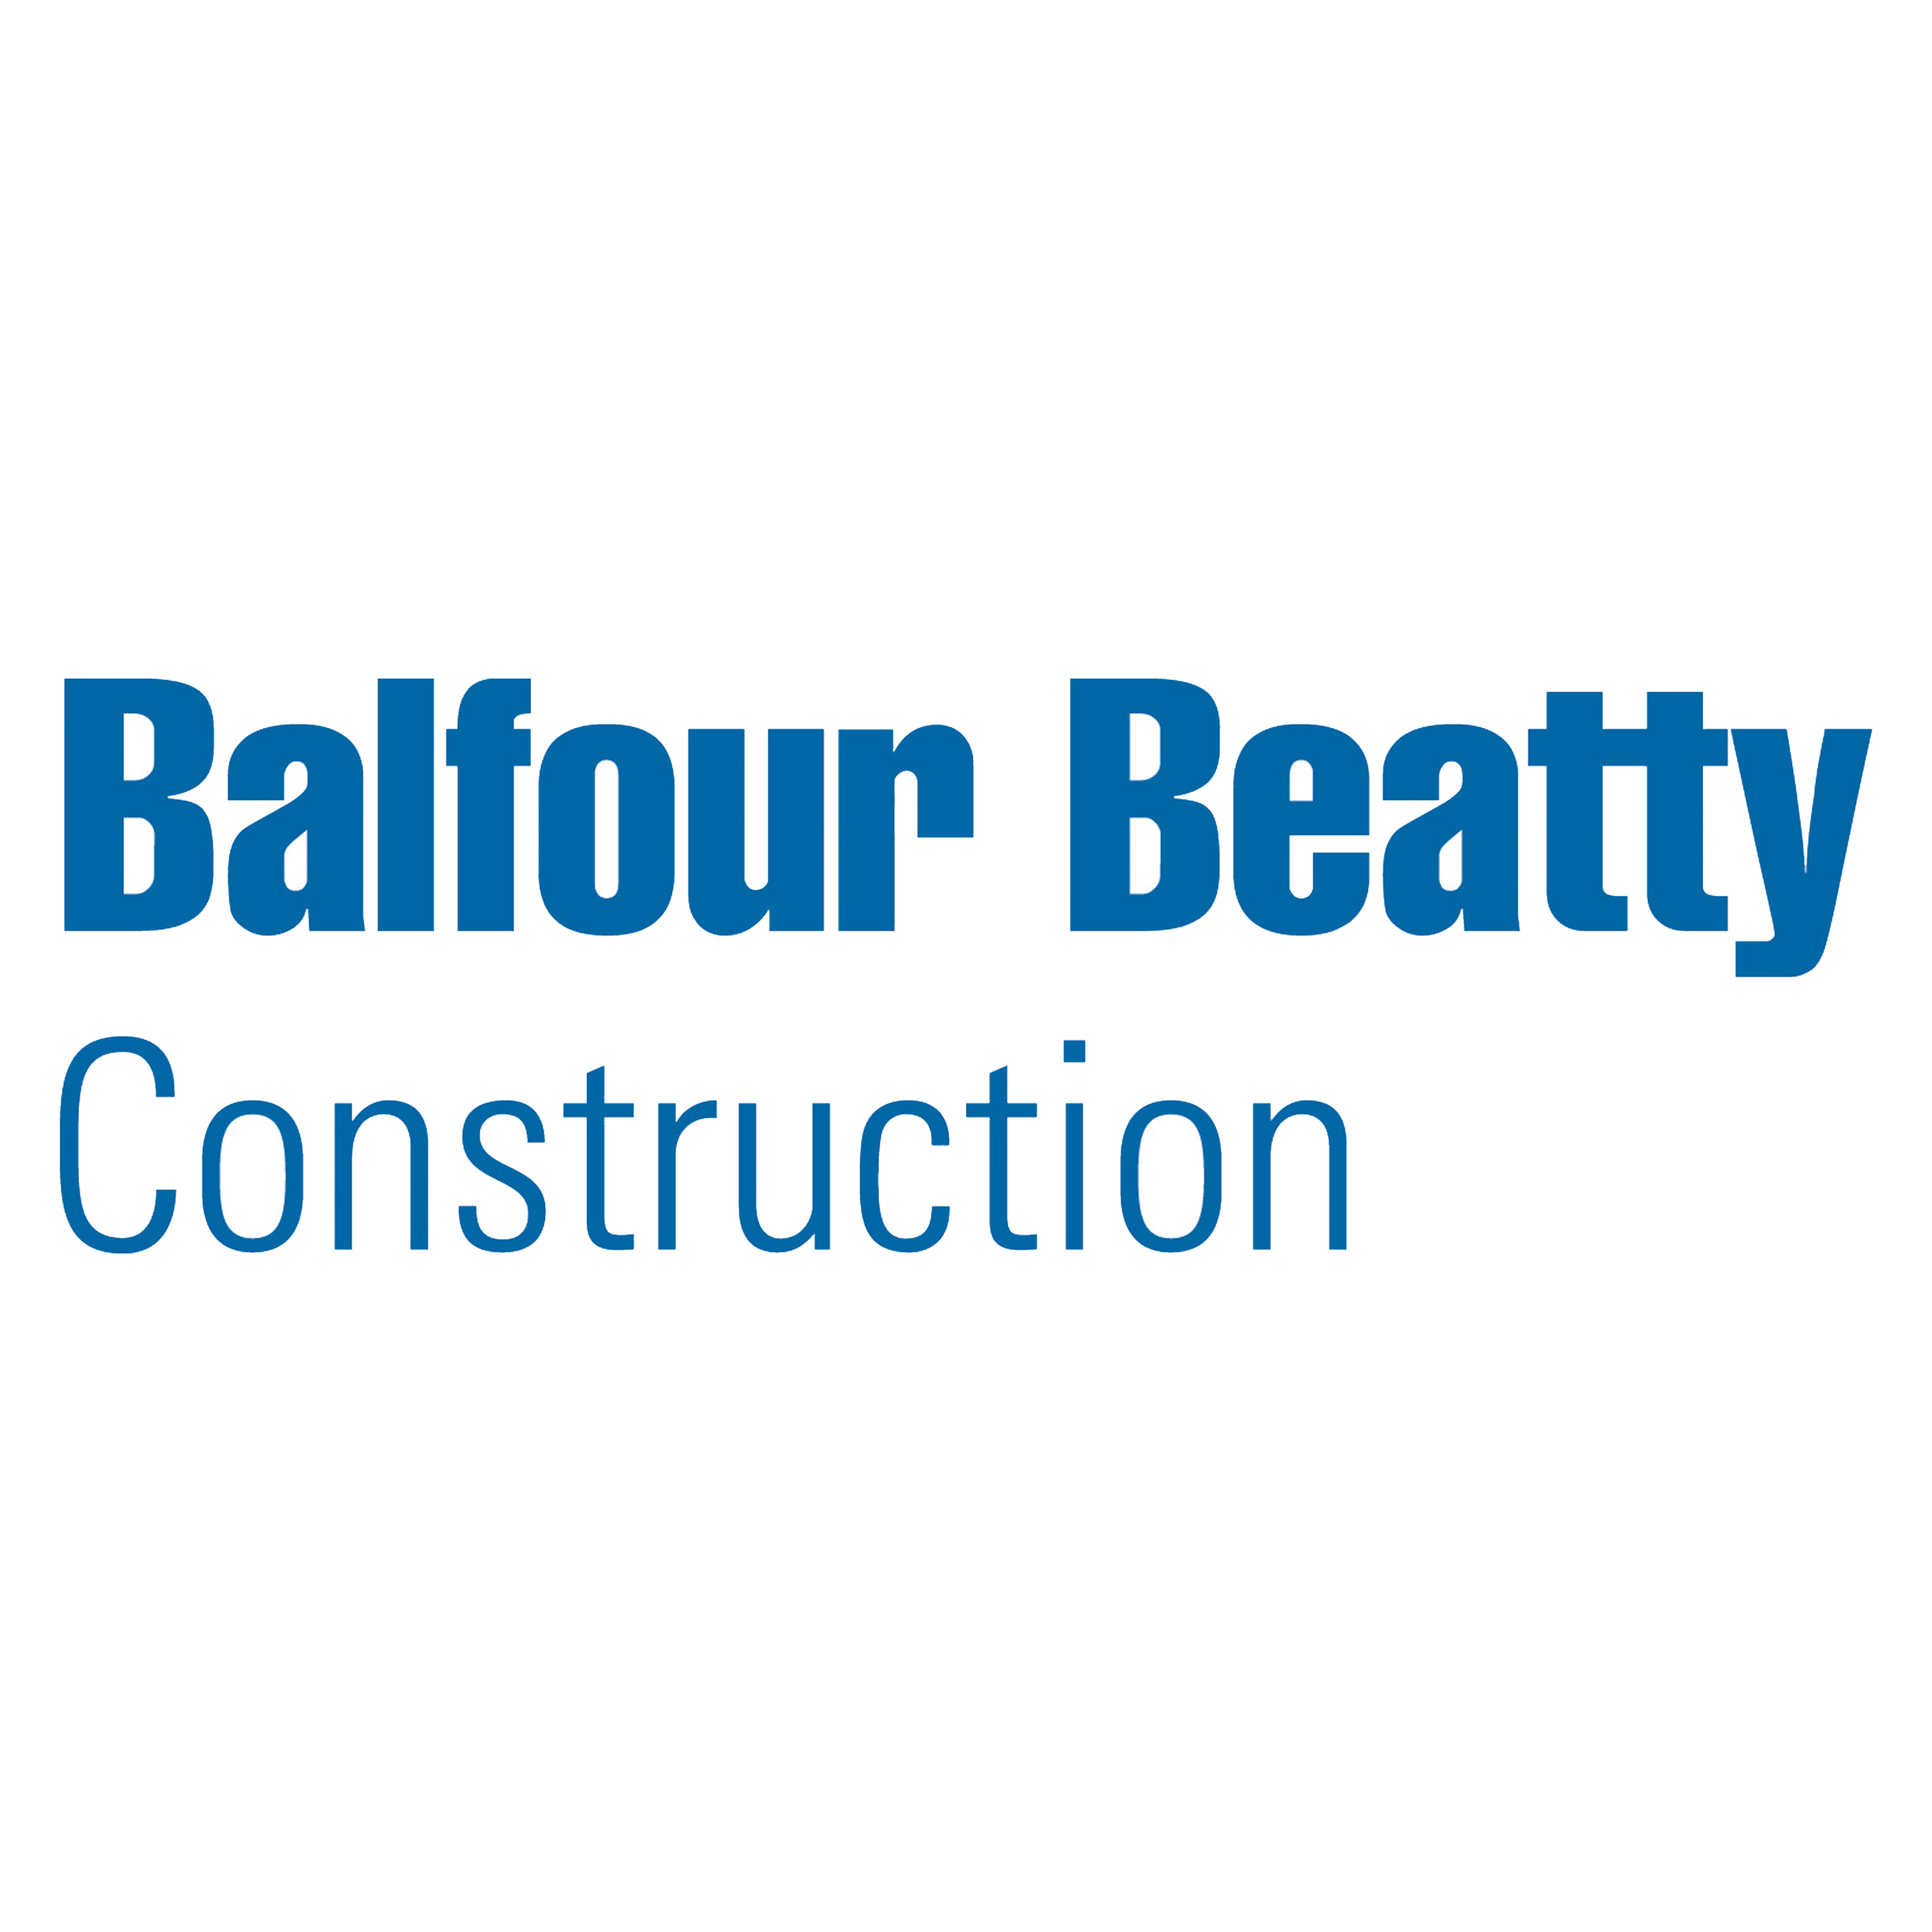 Balfour Beatty Construction logo